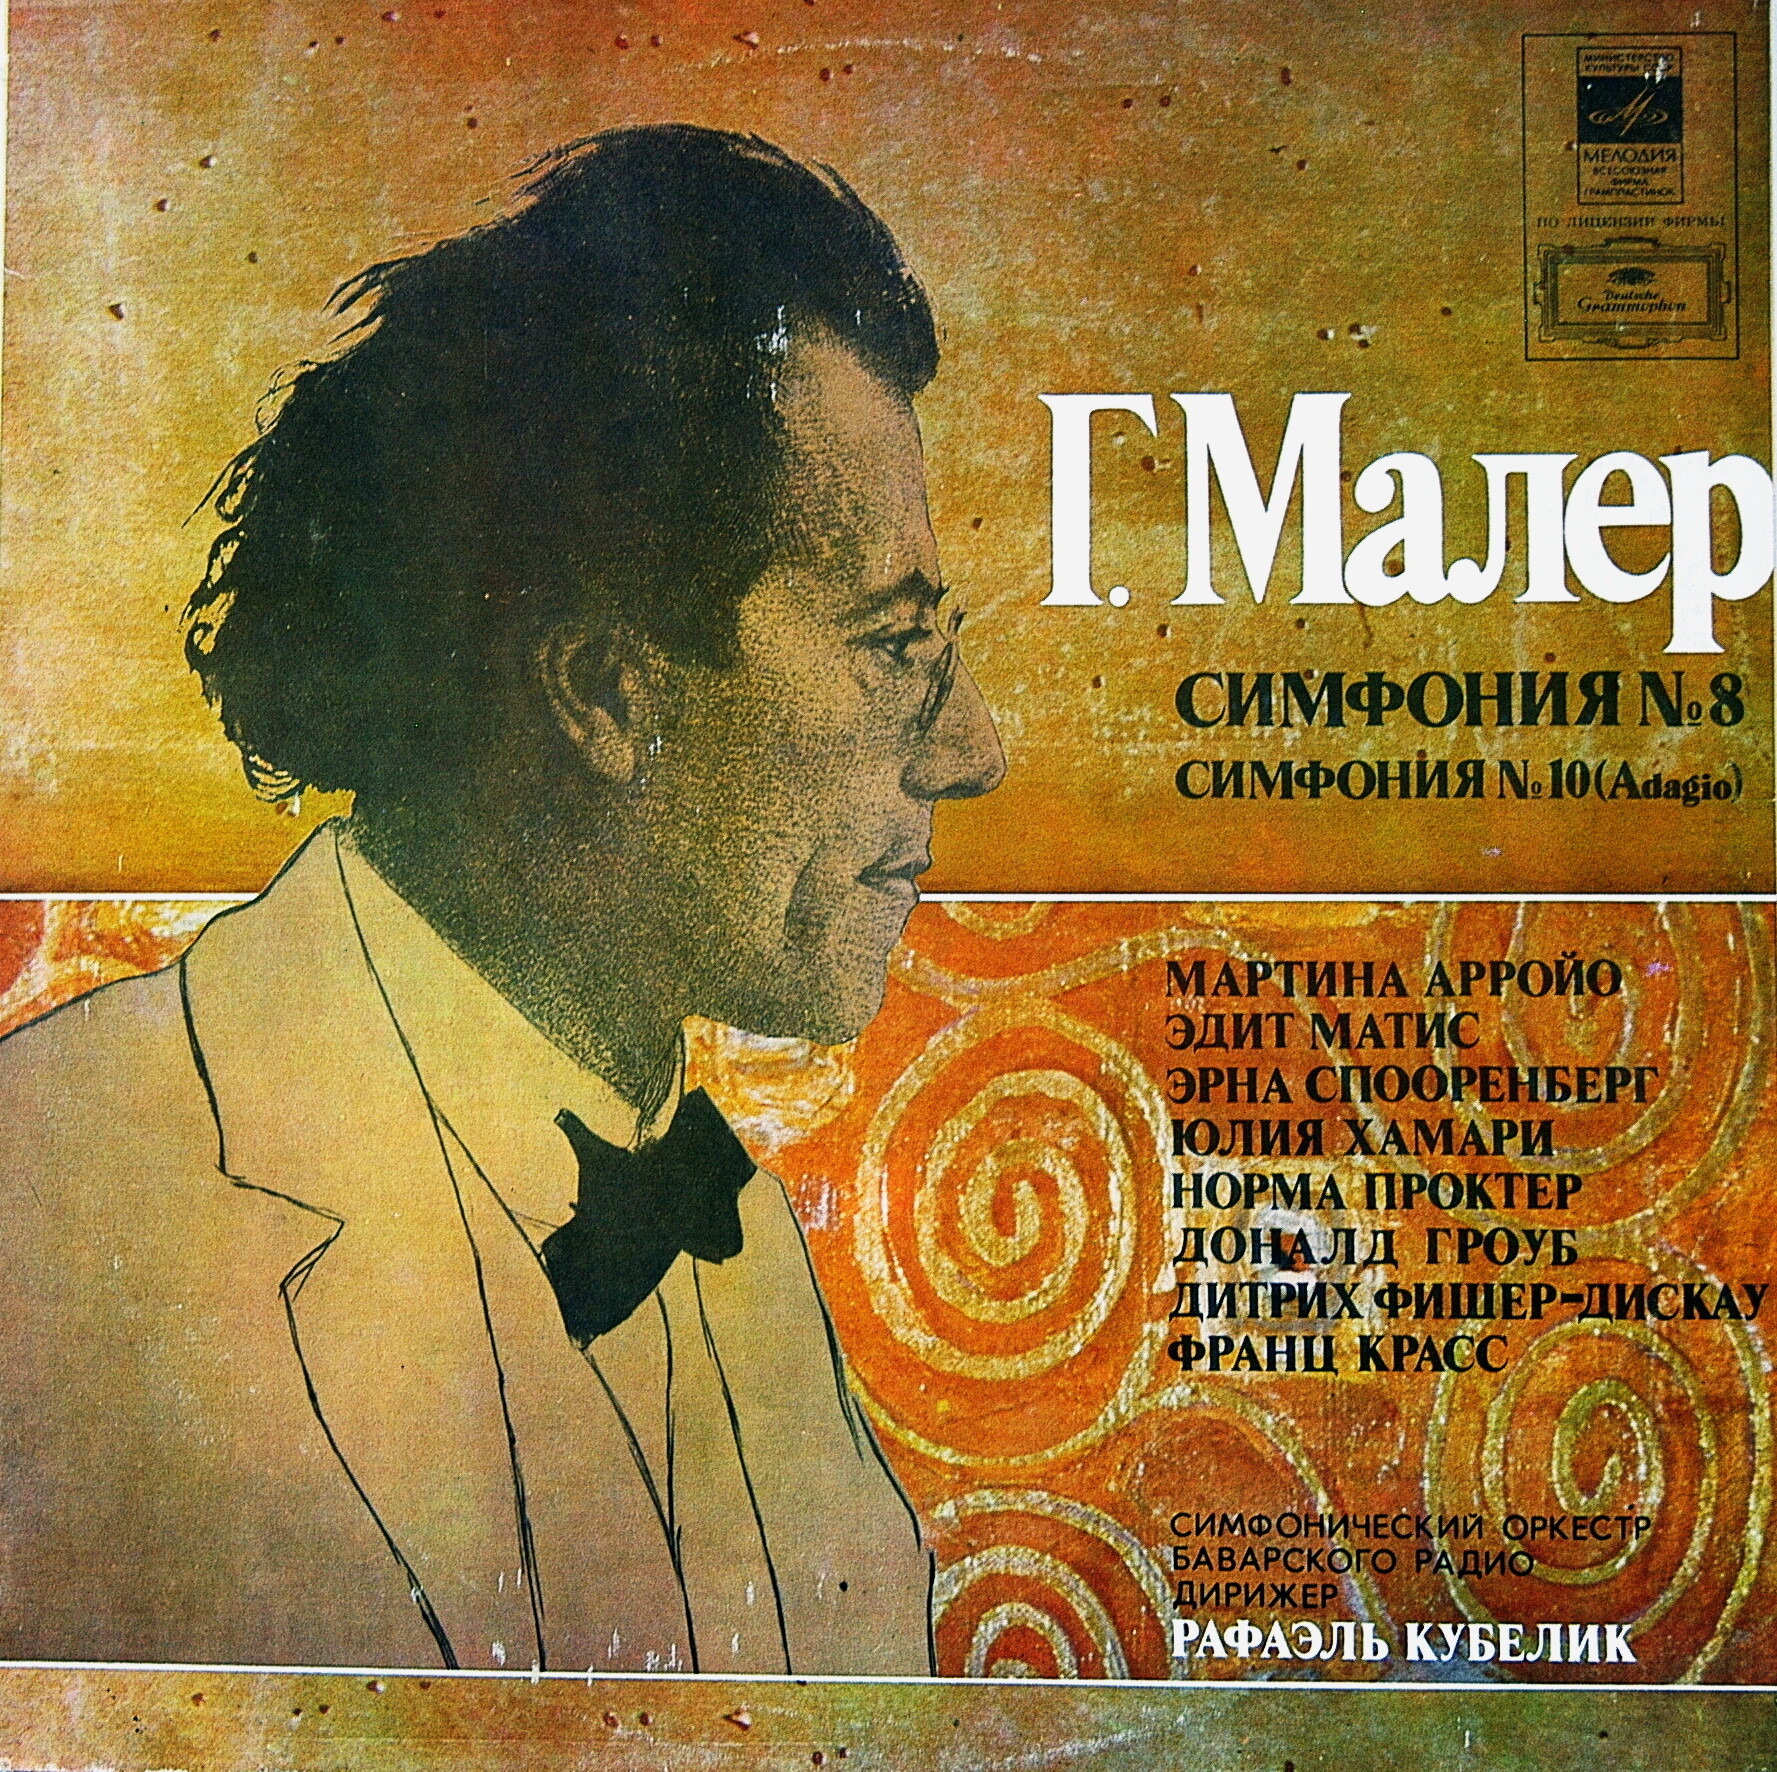 Г. МАЛЕР (1860-1911): Симфония № 8, Симфония № 10